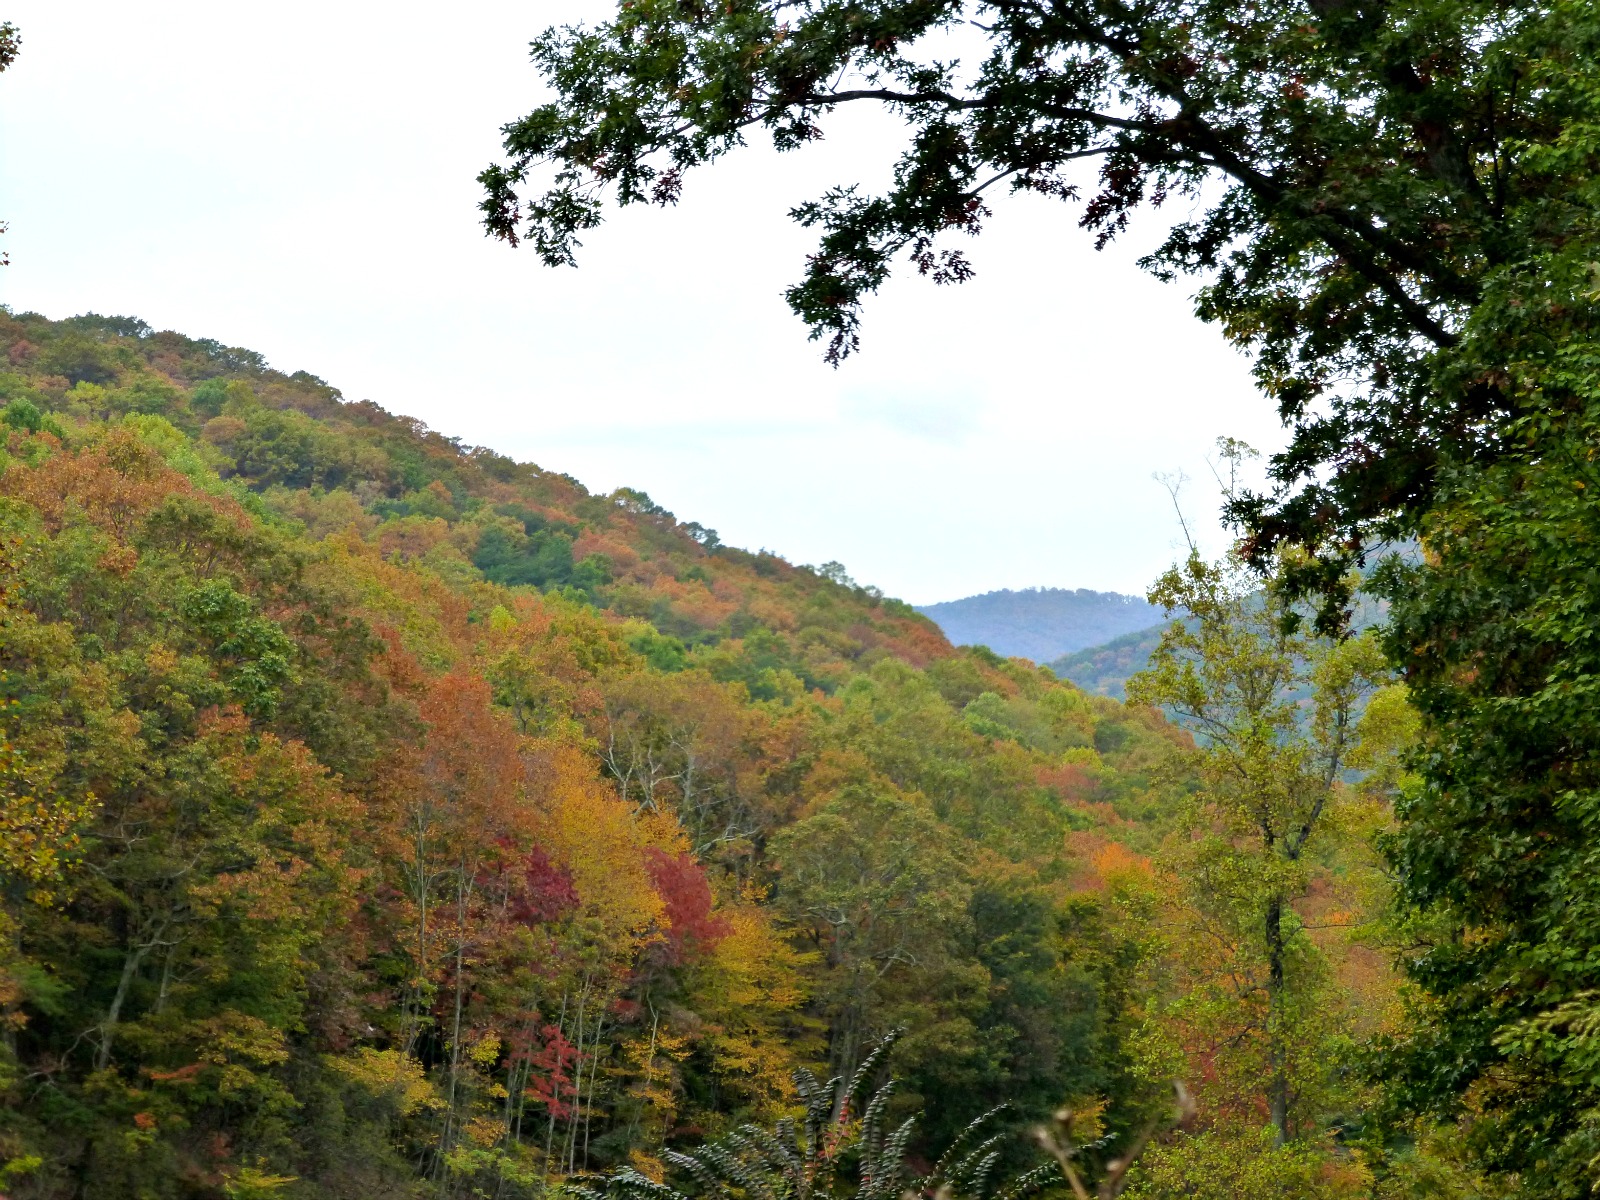 October 25, 2015 - Mountain view in Bent Tree